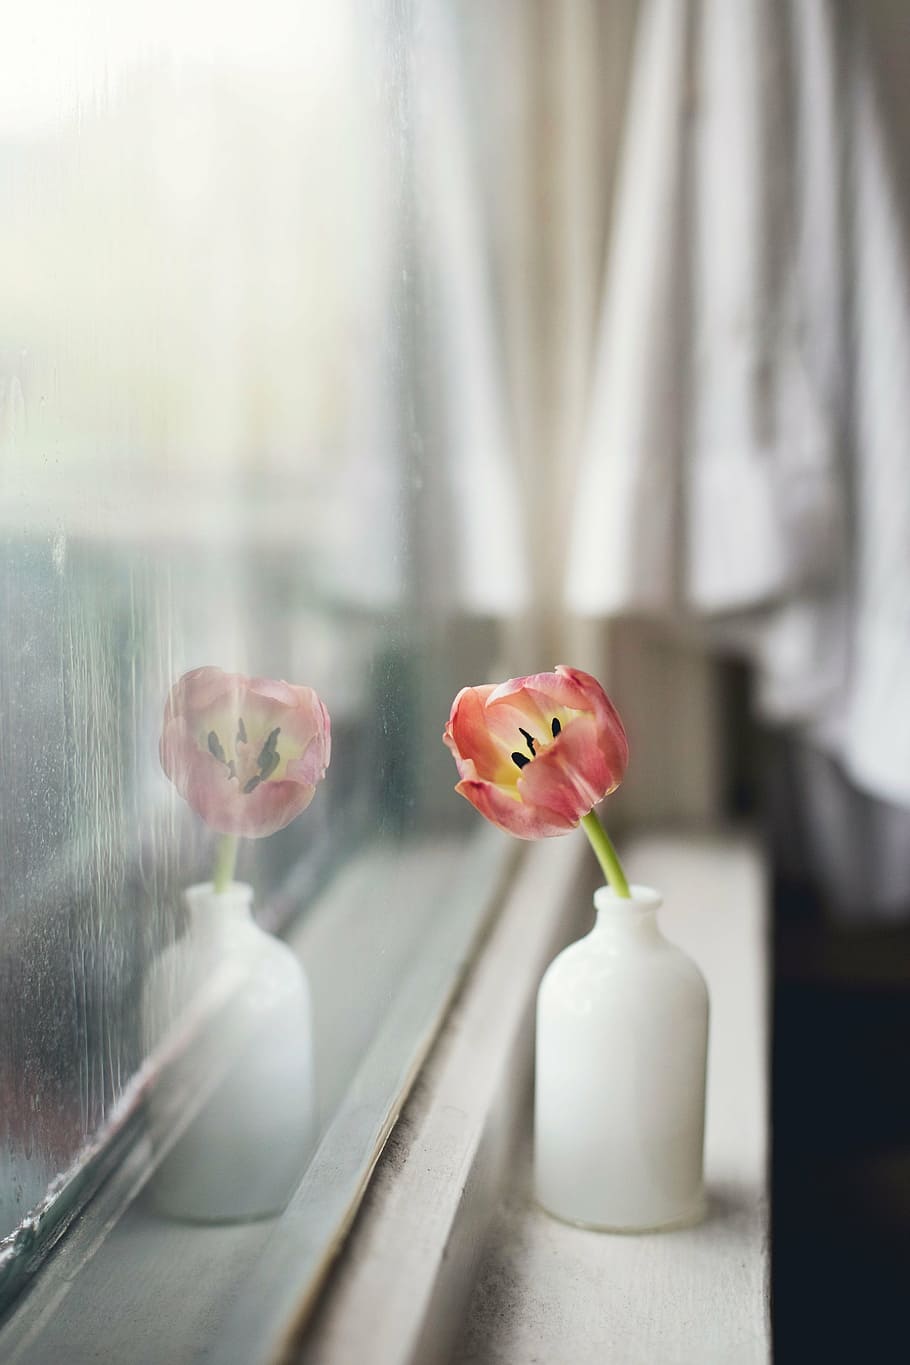 rosa, flor de tulipán, blanco, florero, flor, interior, pantalla, ventana, vidrio, dormitorio